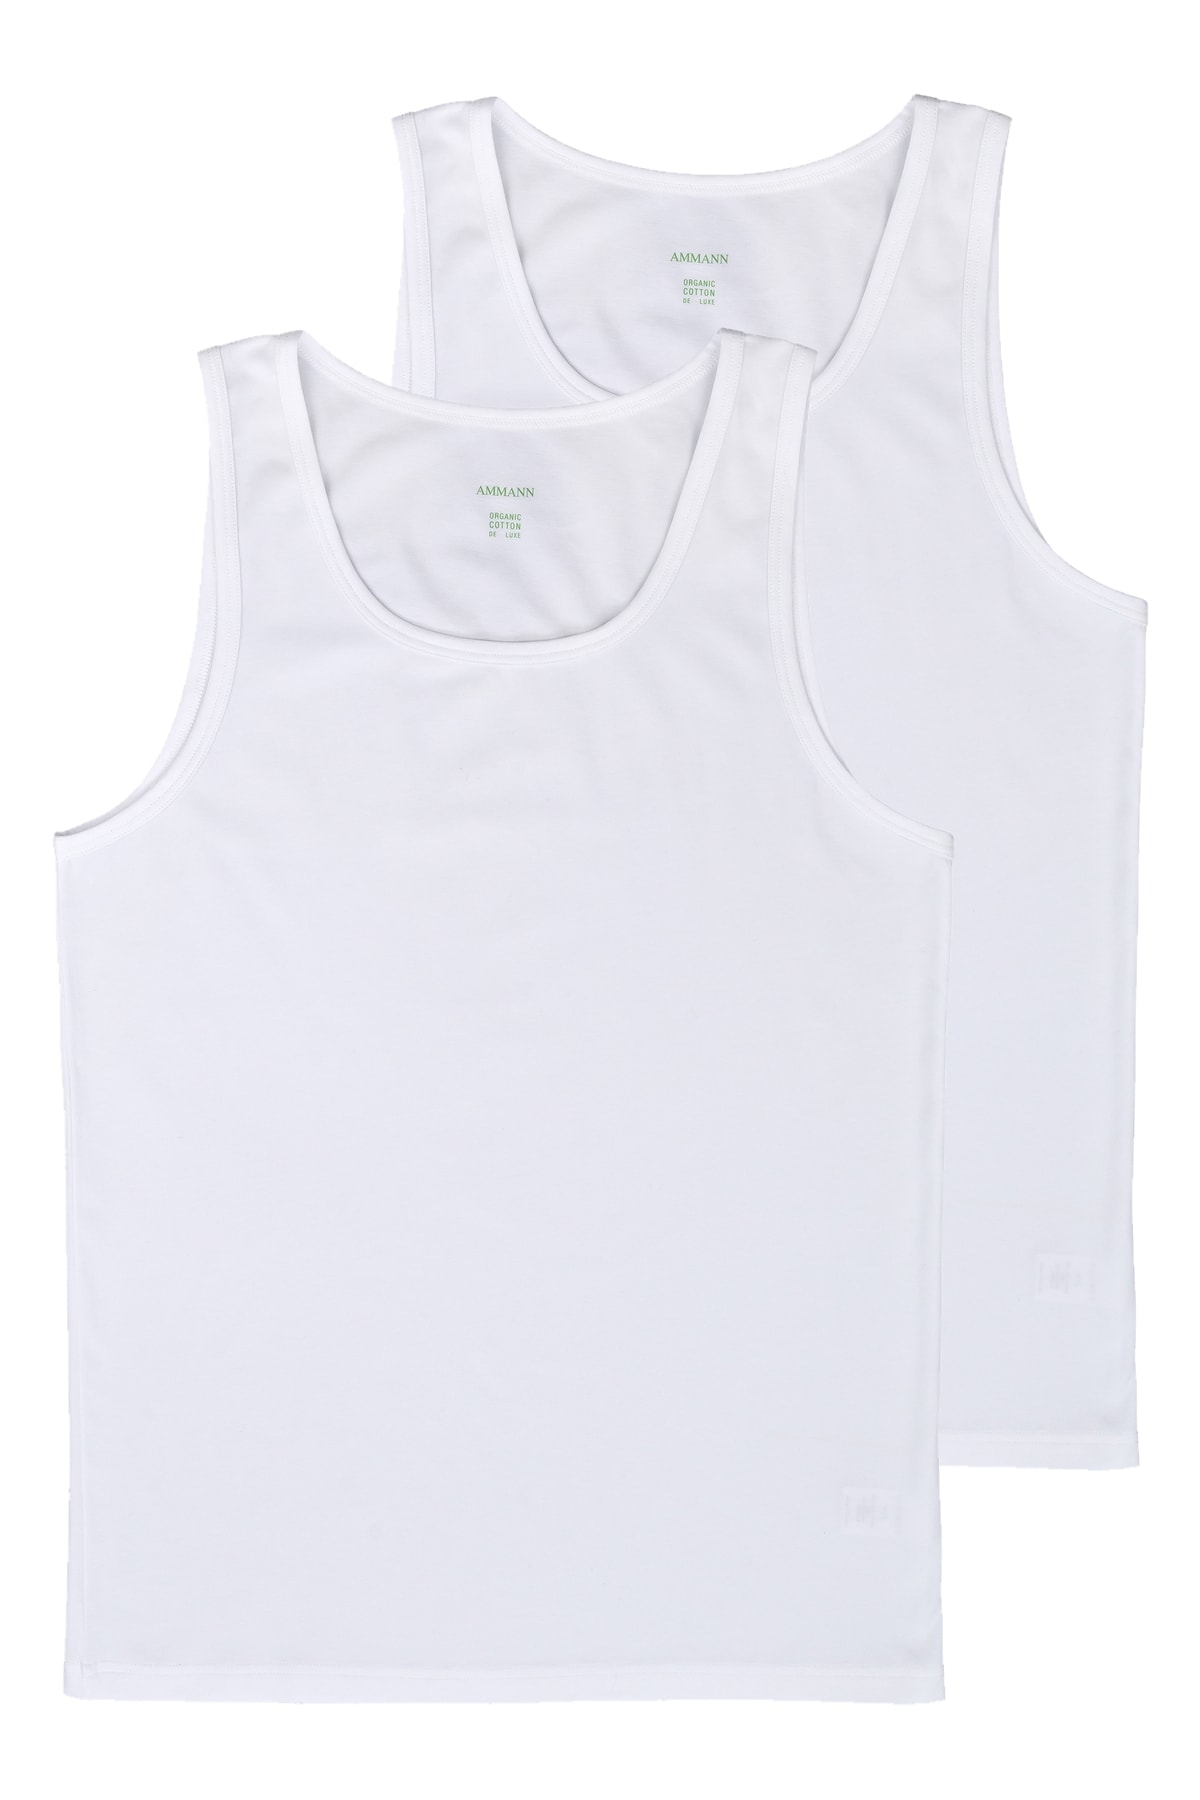 AMMANN Unterhemd Weiß Regular Fit Fast ausverkauft